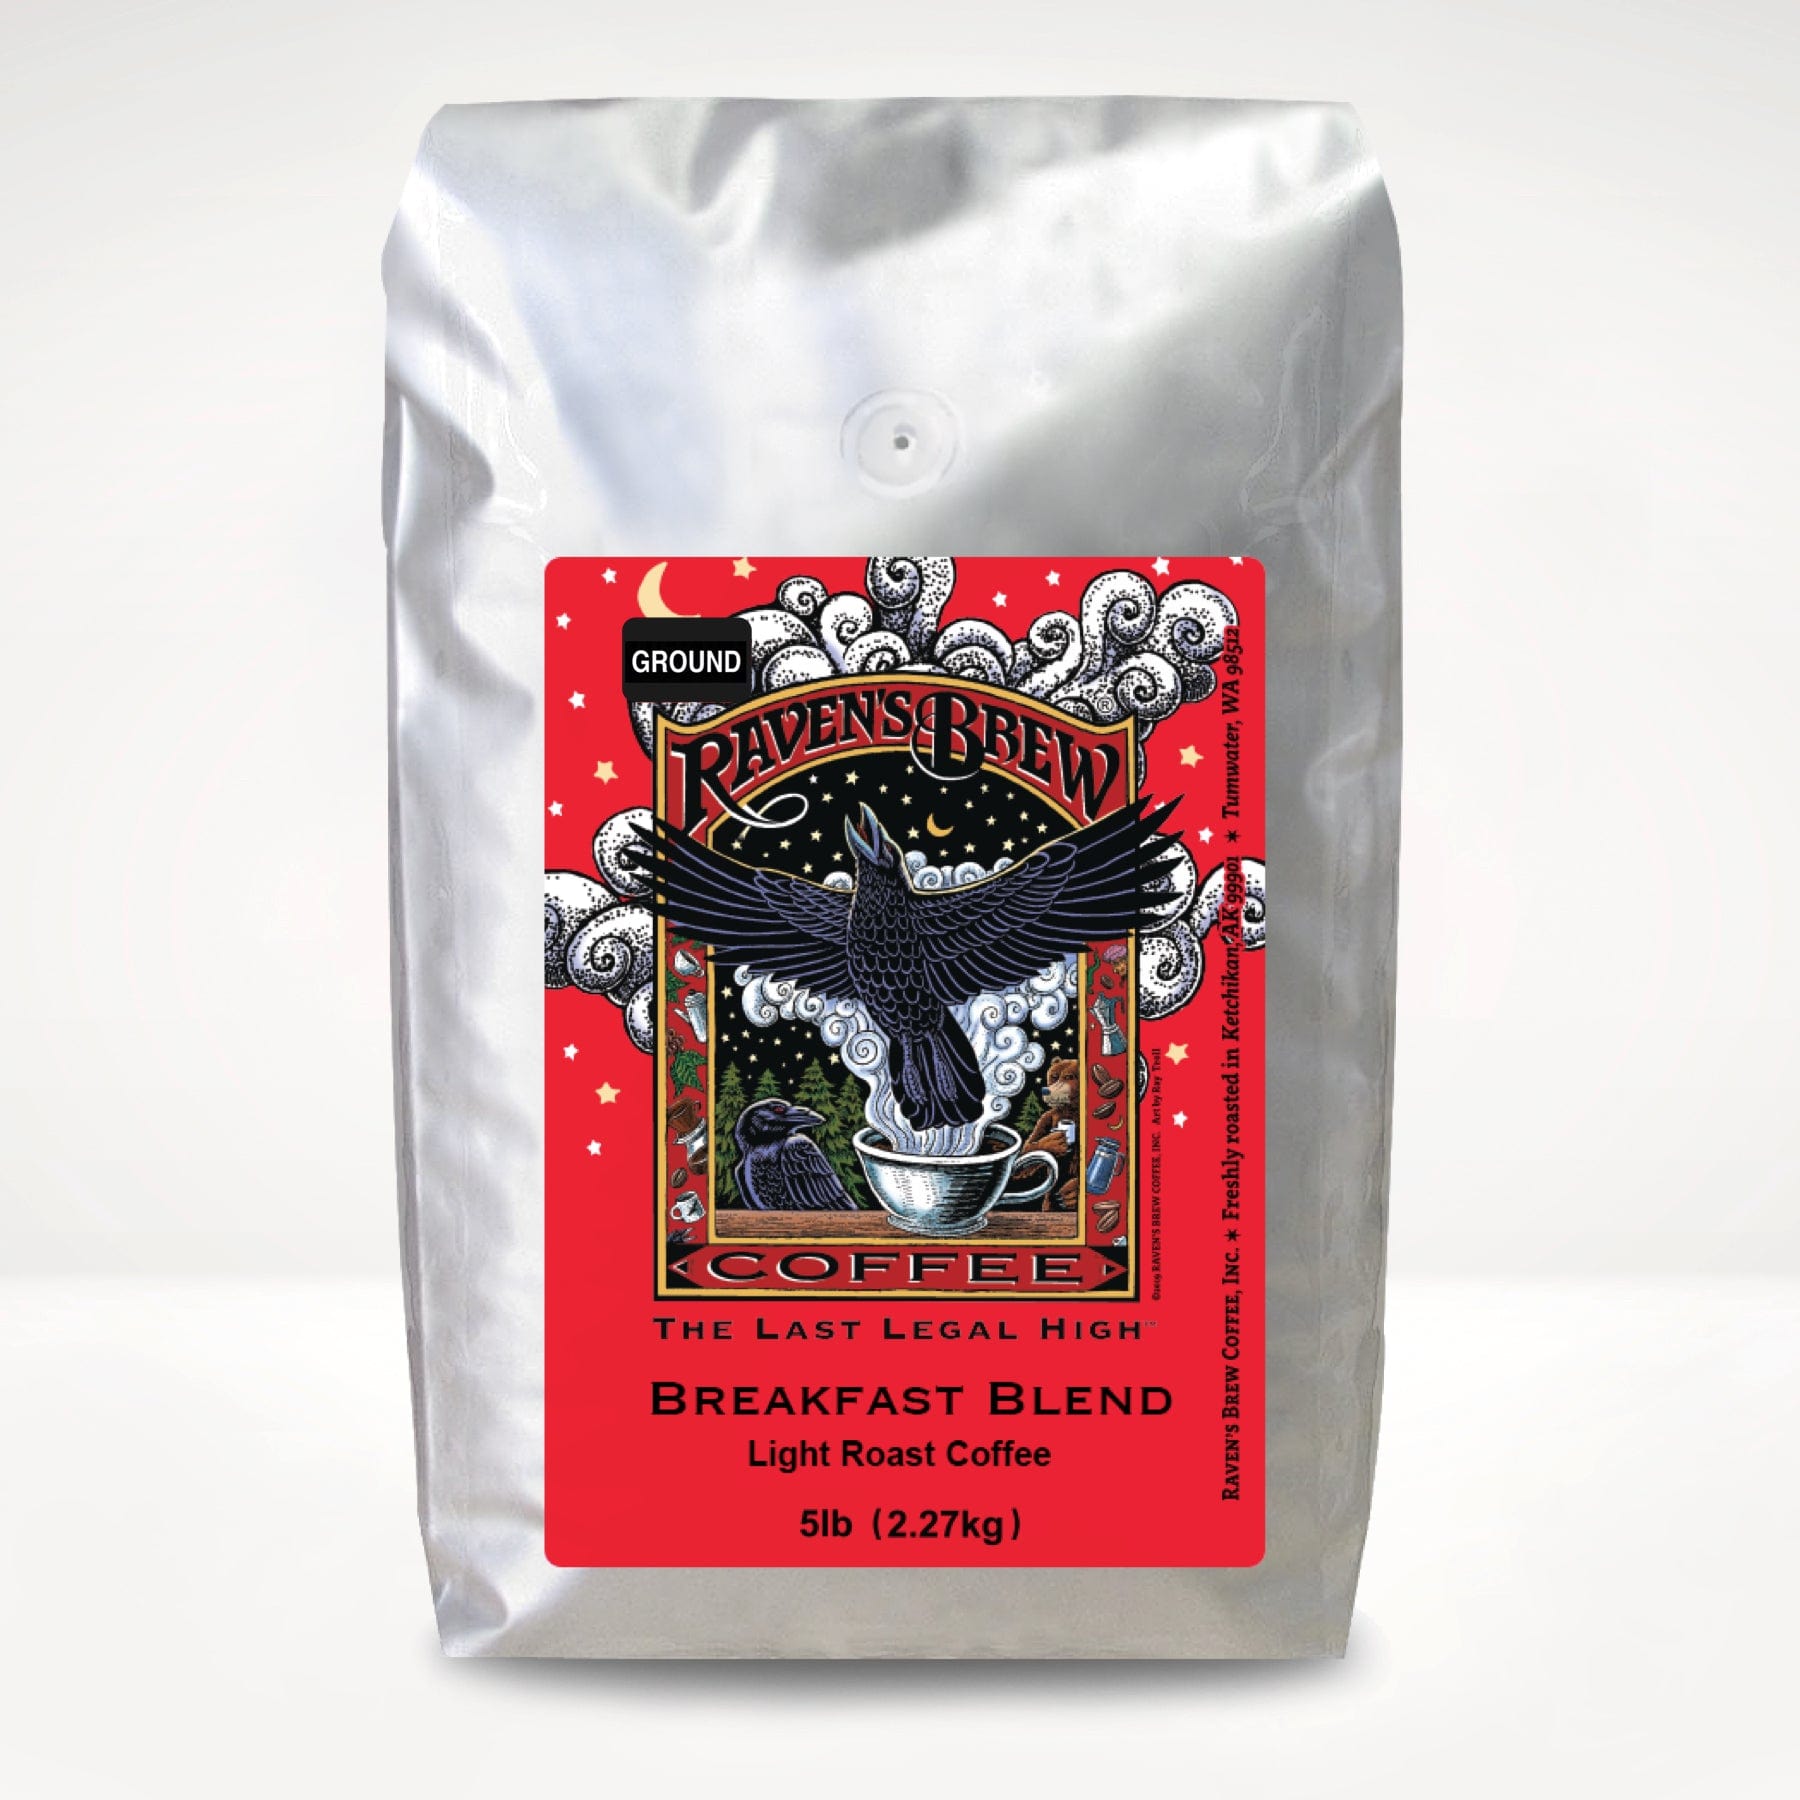  5lb Ground Raven's Brew® Breakfast Blend Light Roast Coffee